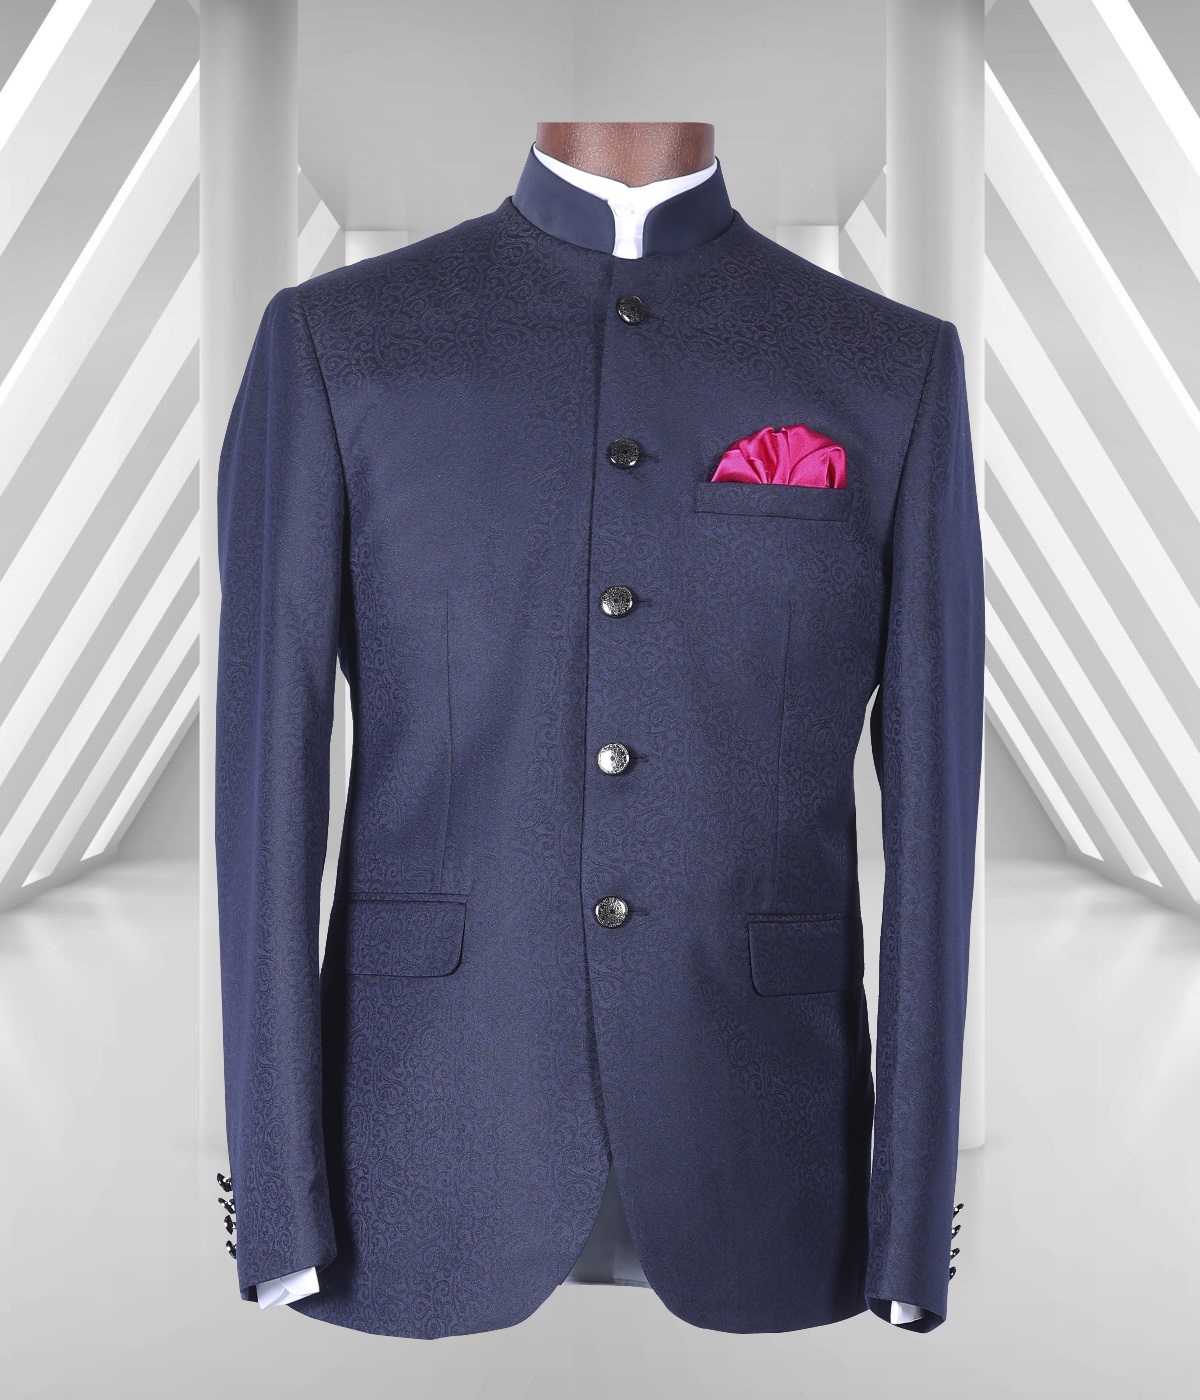 NKOOGH Grey Flannel Office Shirts for Men Men鈥橲 Suit Slim 3 Piece Suit  Business Wedding Party Jacket Vest & Pants Coat - Walmart.com